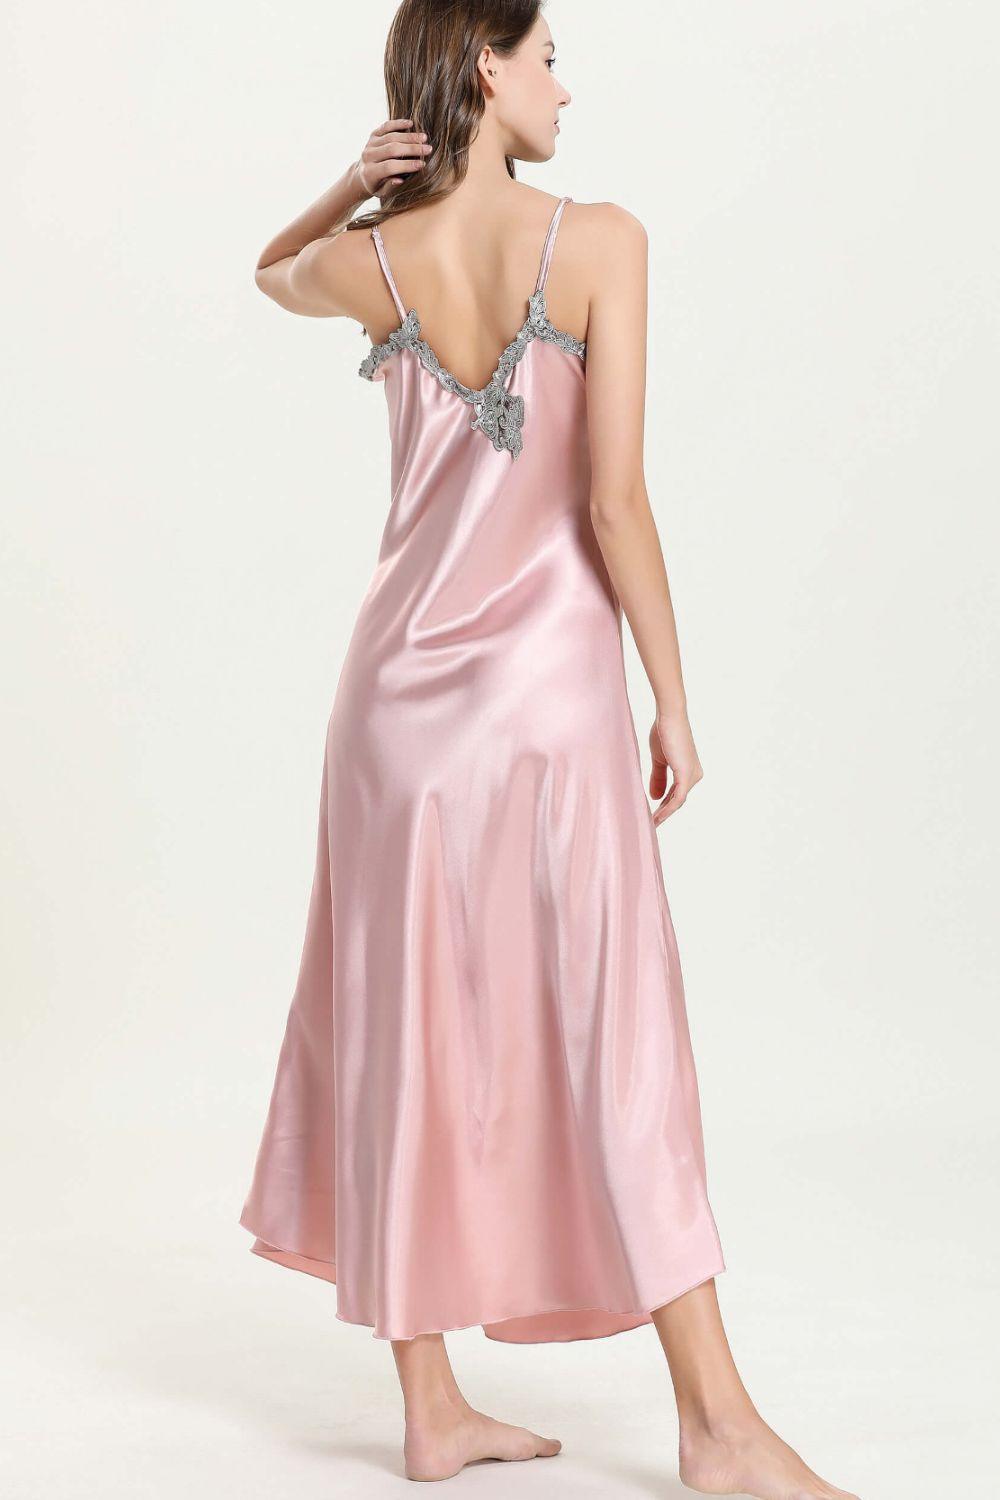 Lace Detail Neckline Satin Night Dress - MXSTUDIO.COM